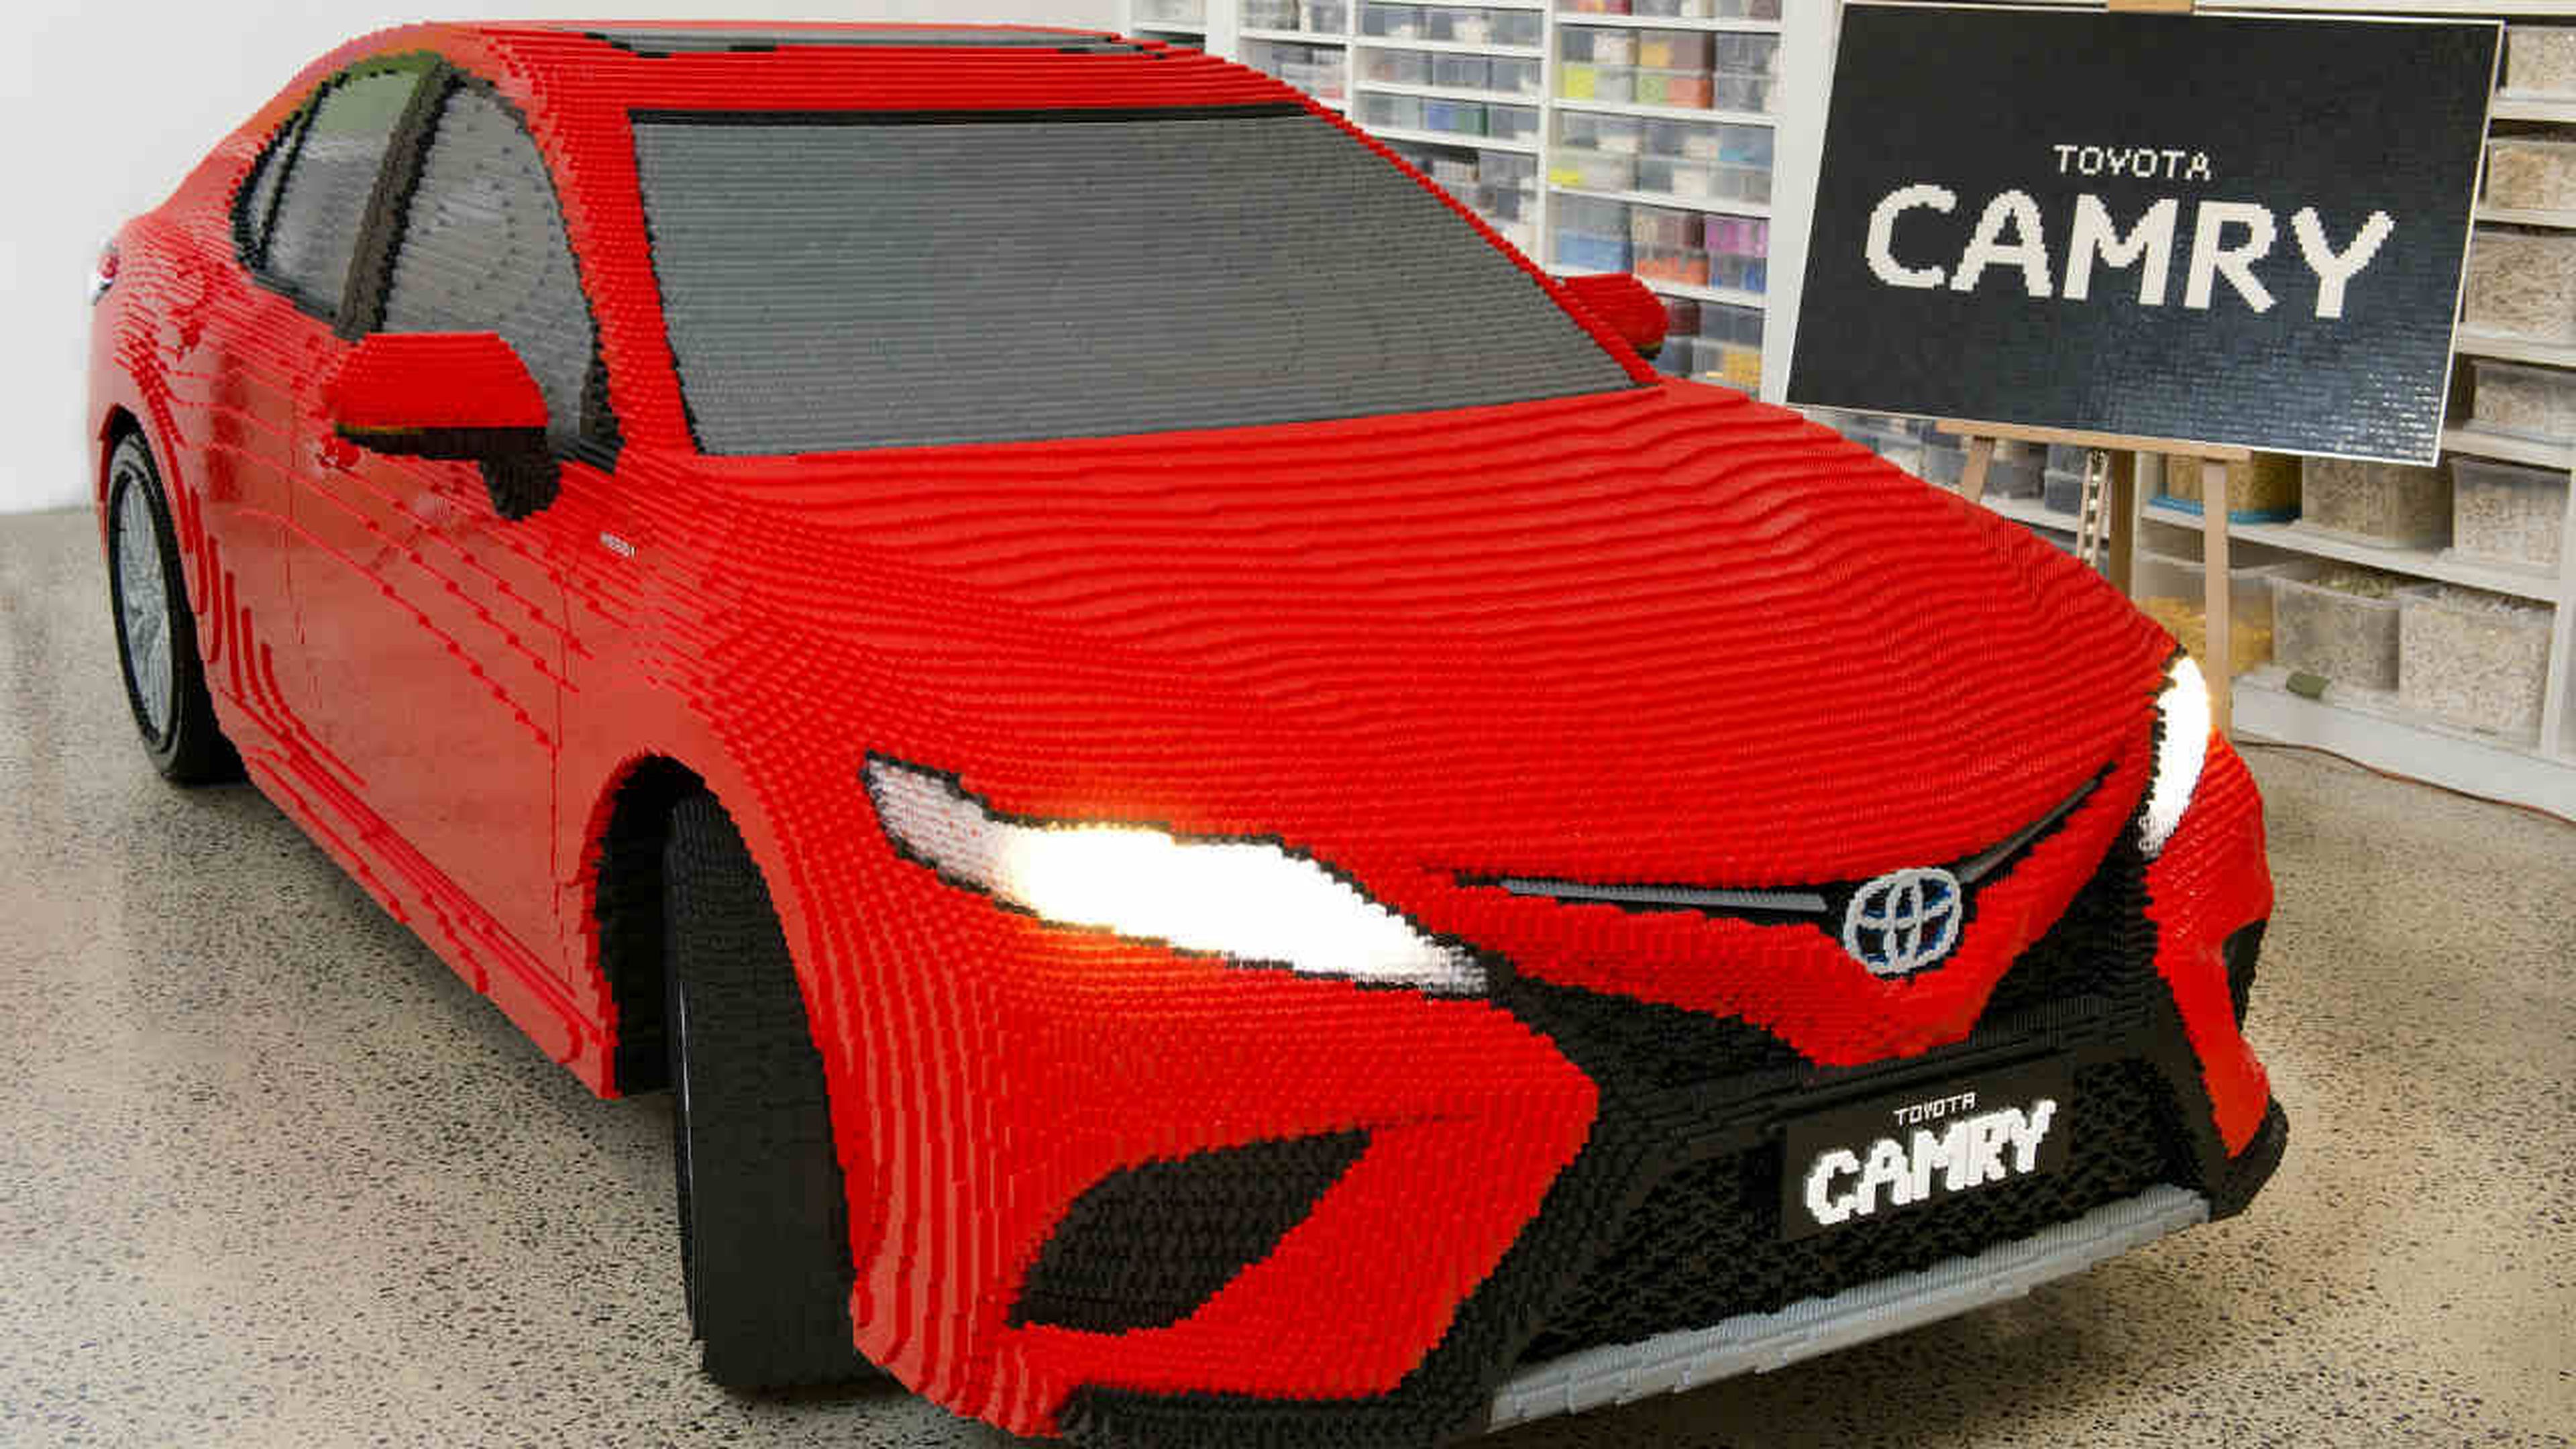 Toyota Camry Lego